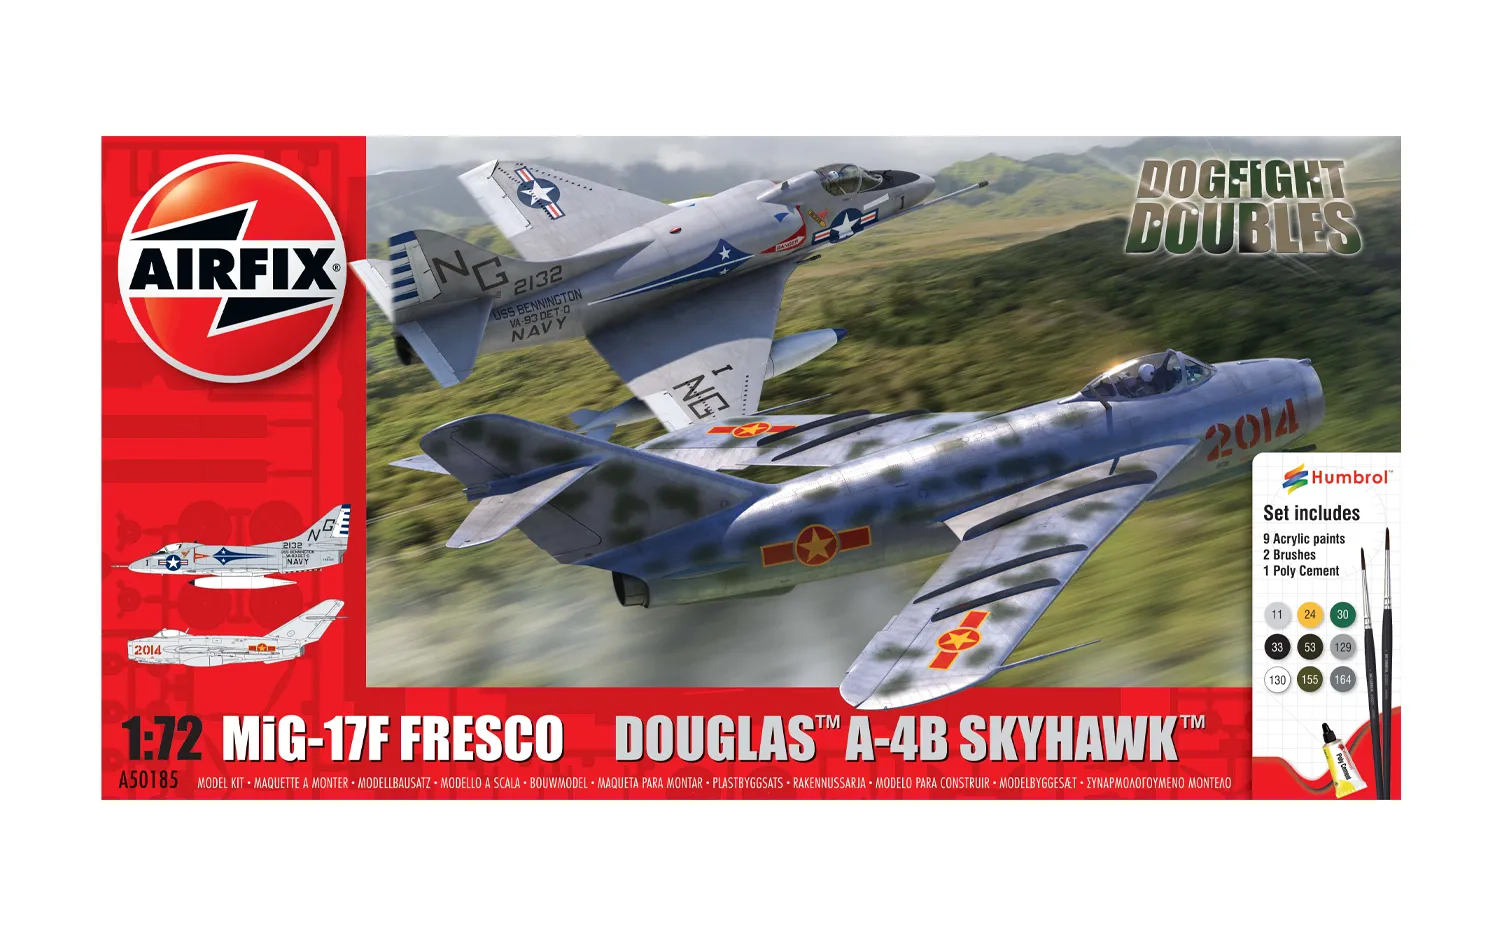 Mig 17F Fresco Douglas A-4B Skyhawk Dogfight Double